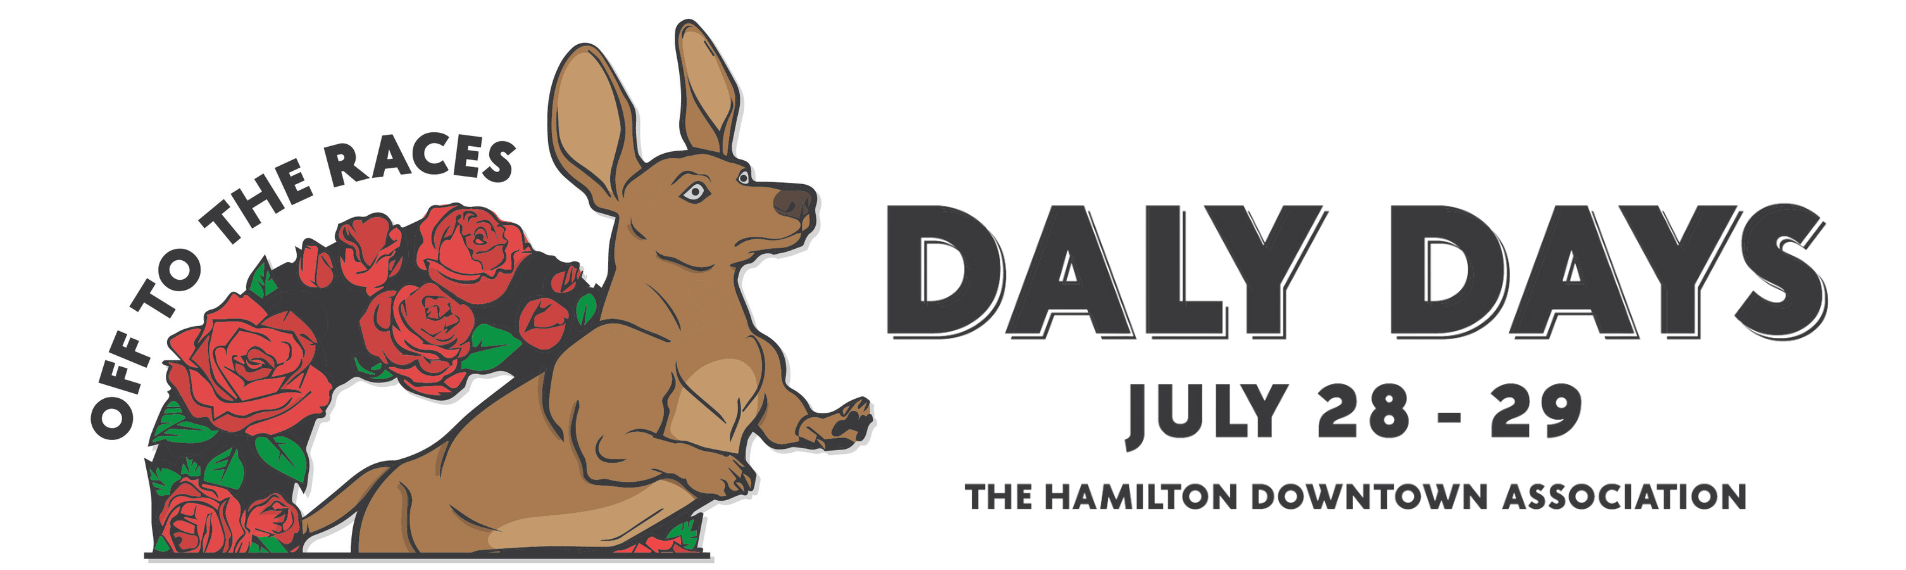 Daly Days — Hamilton Downtown Association